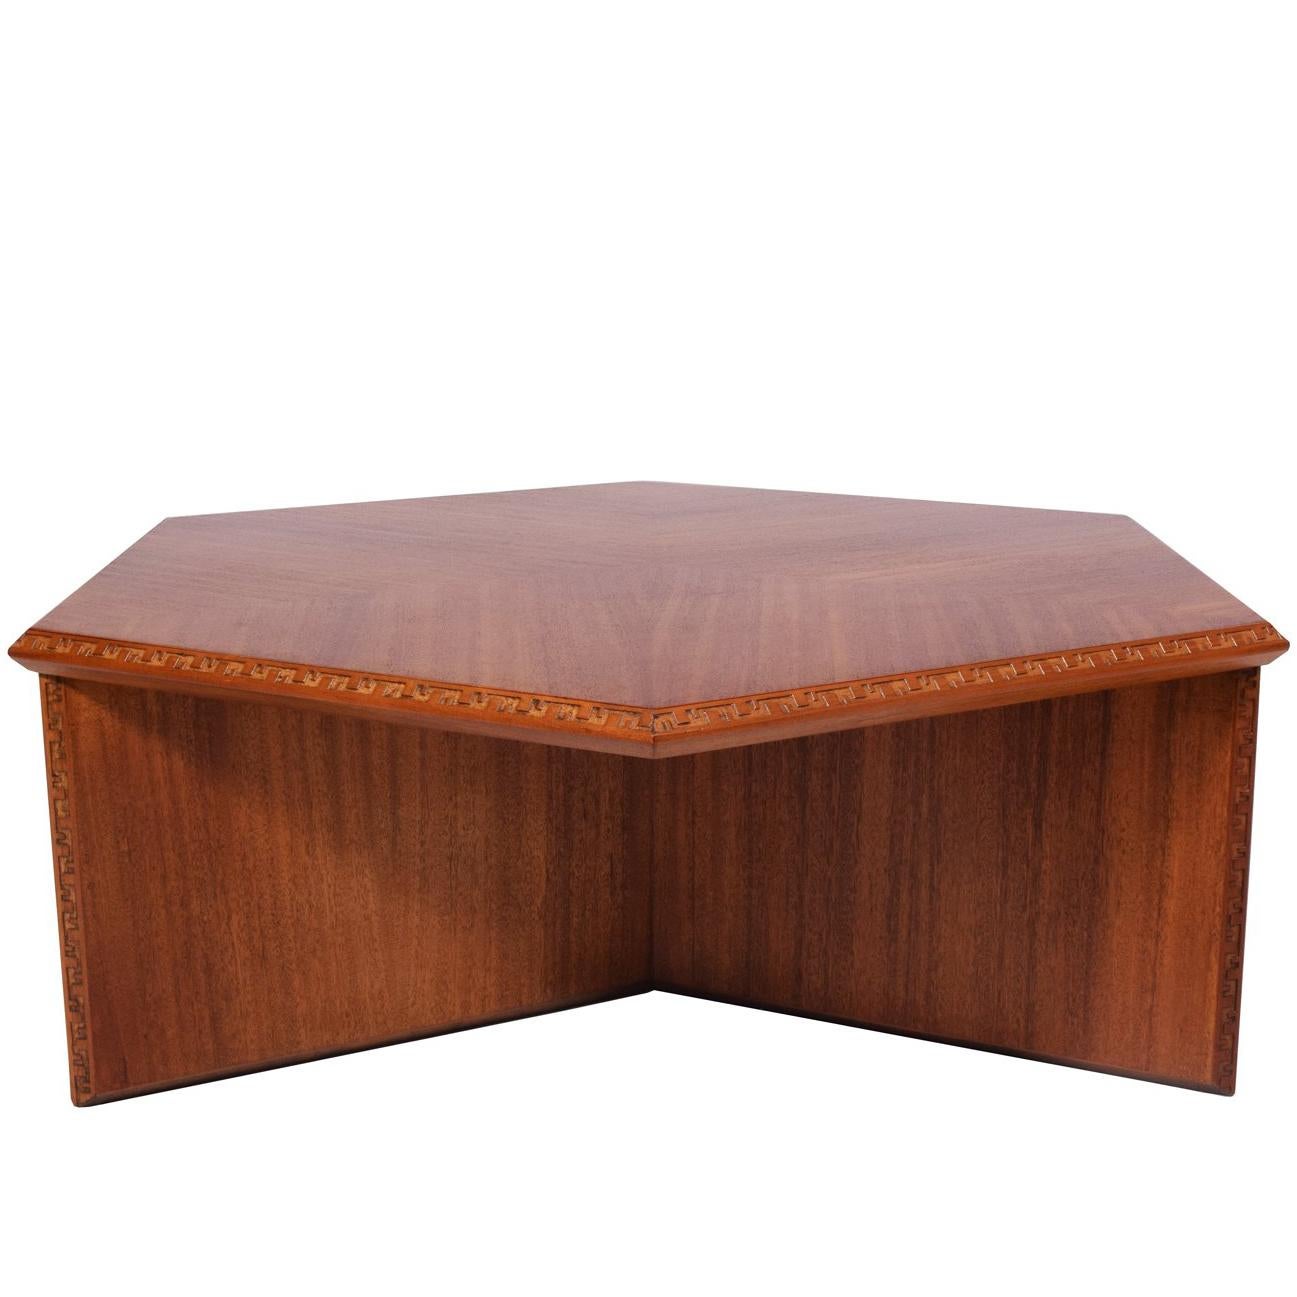 Frank Lloyd Wright Hexagonal Coffee Table for Heritage-Henredon